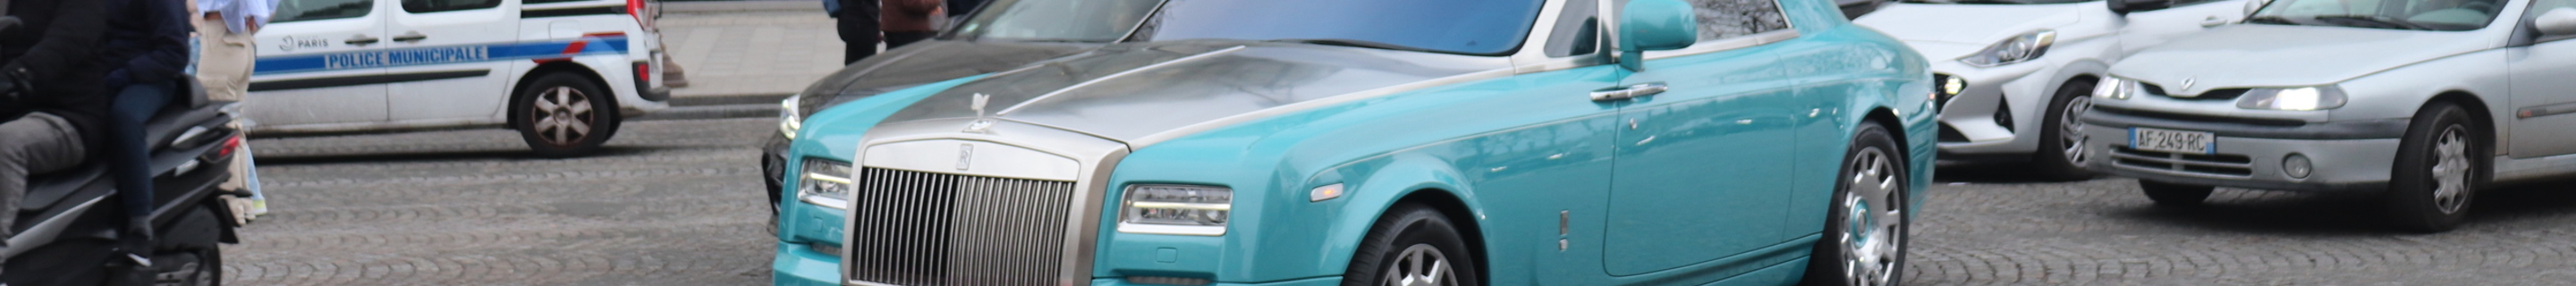 Rolls-Royce Phantom Coupe Series II Ghawwass Edition